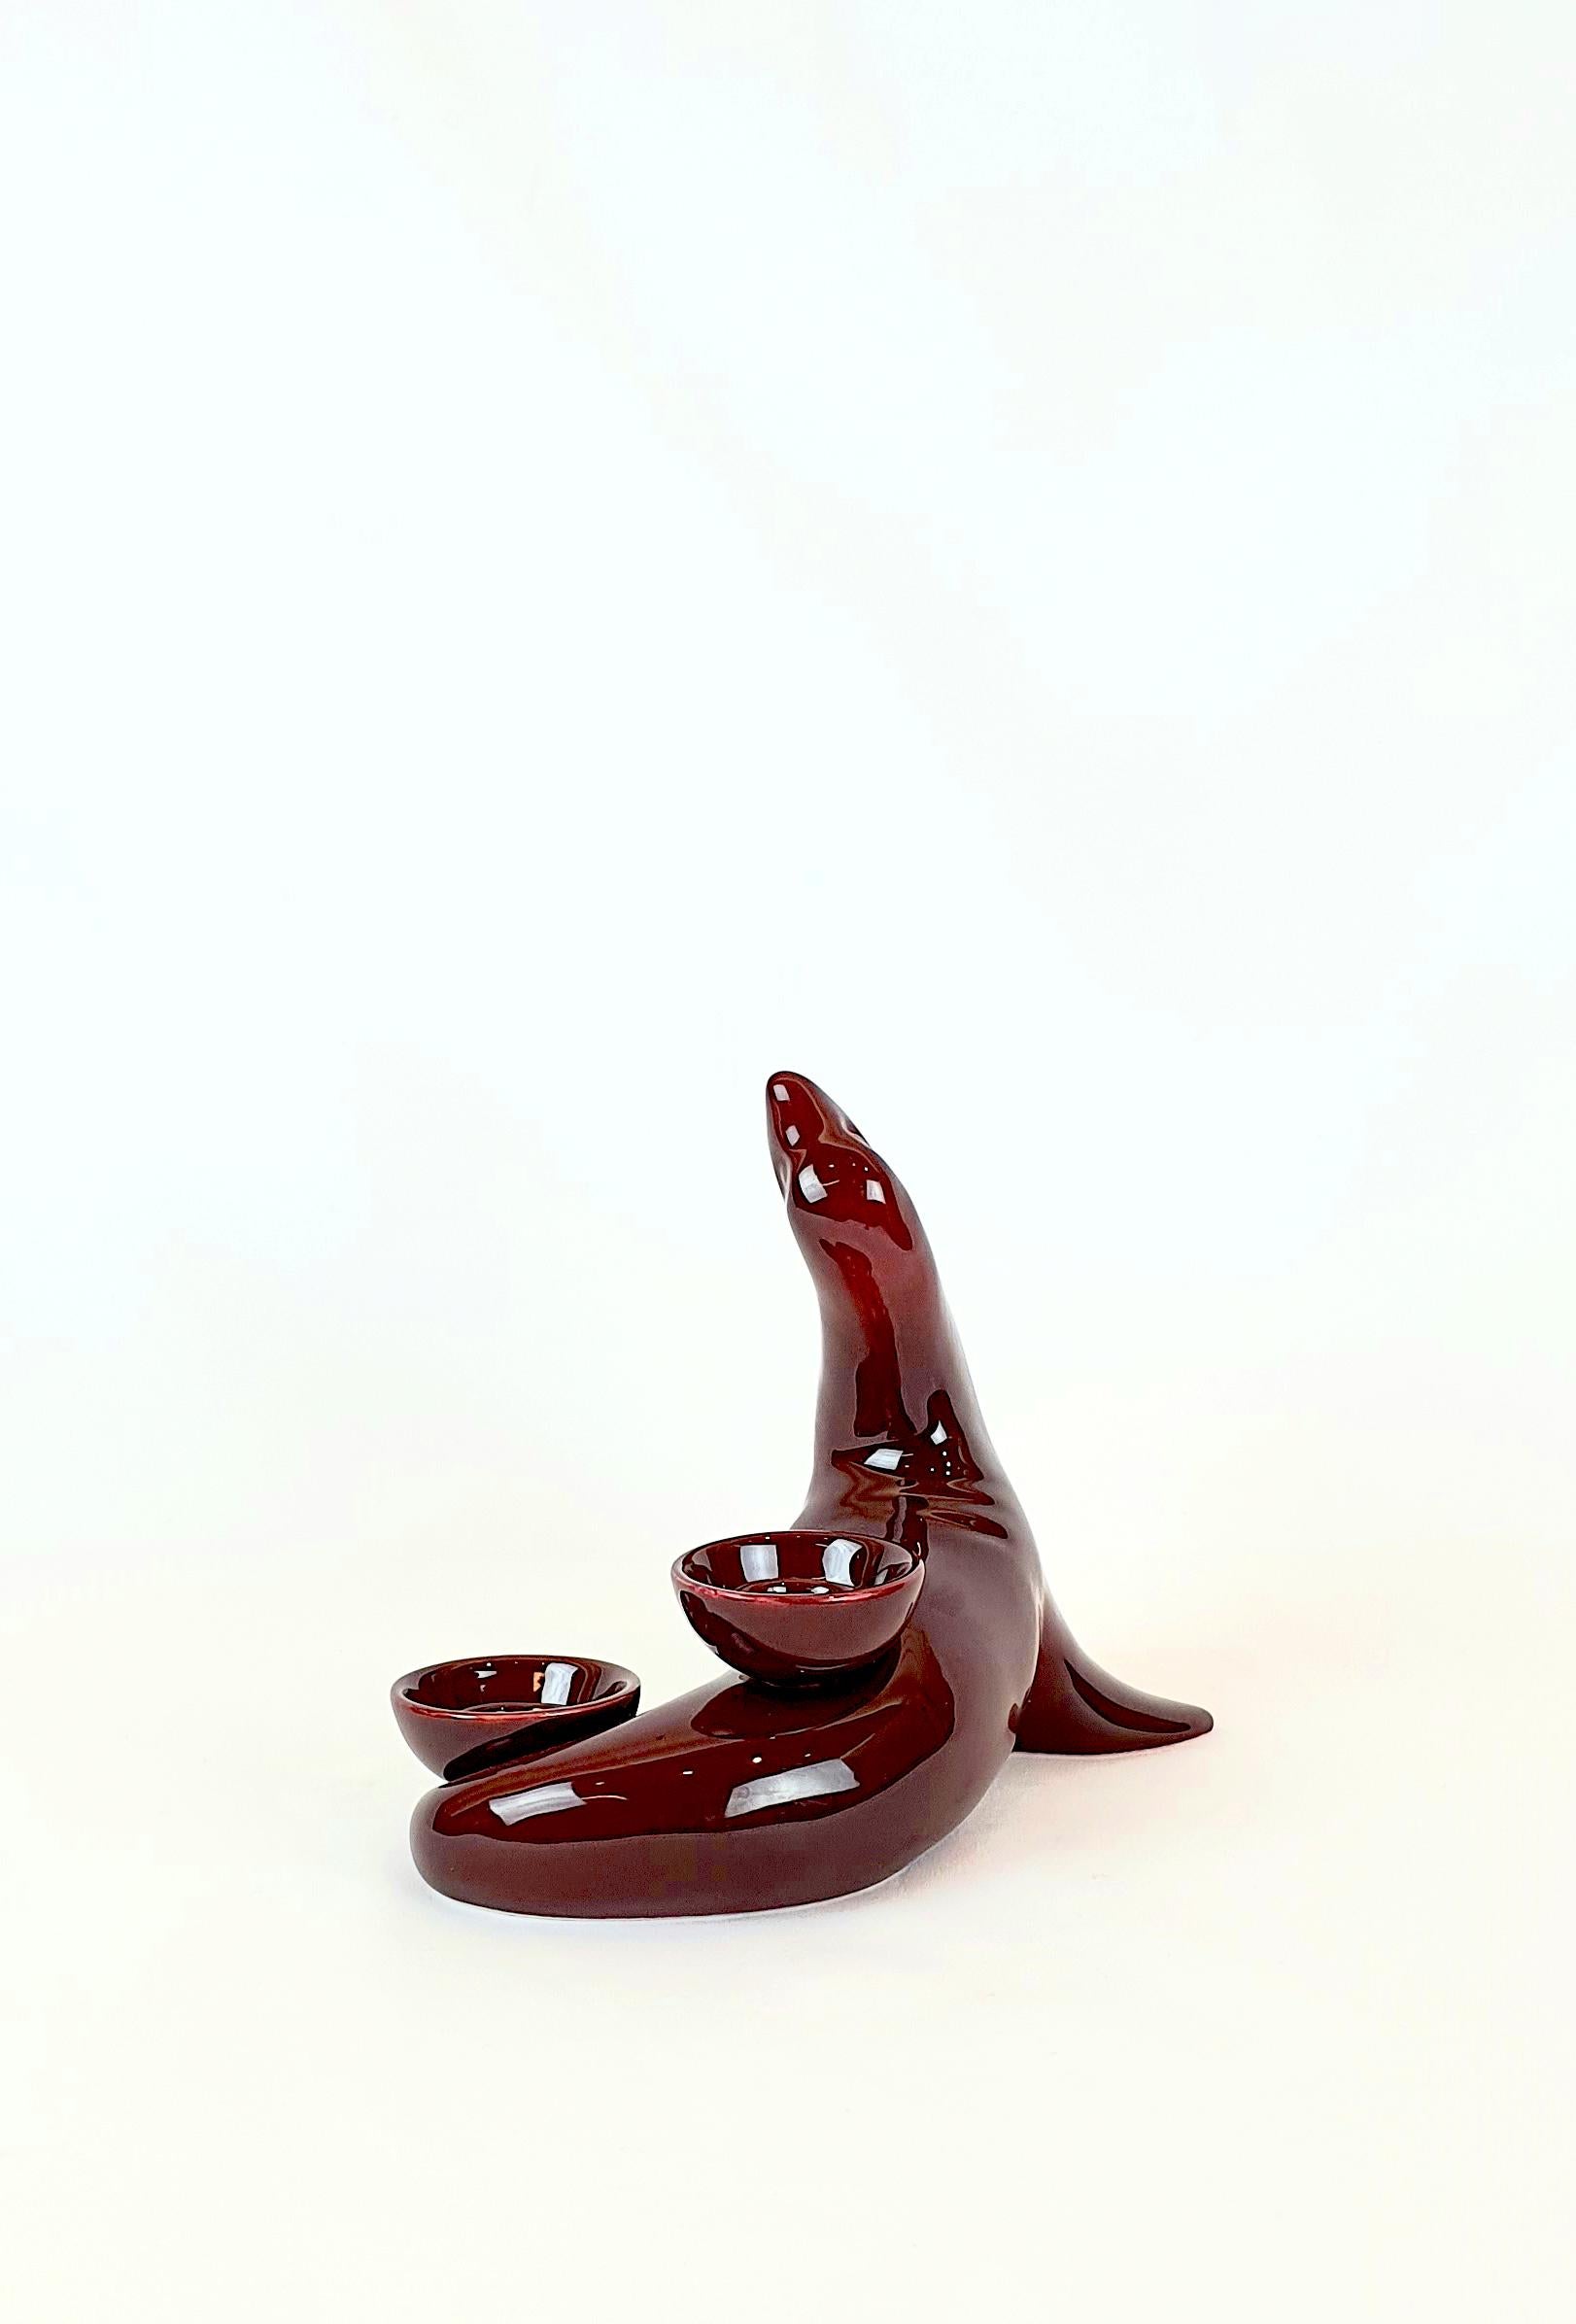 Arts and Crafts Modern Ceramica Gatti 1928 Ceramic Red Burgundy Seal Candle Holder For Sale